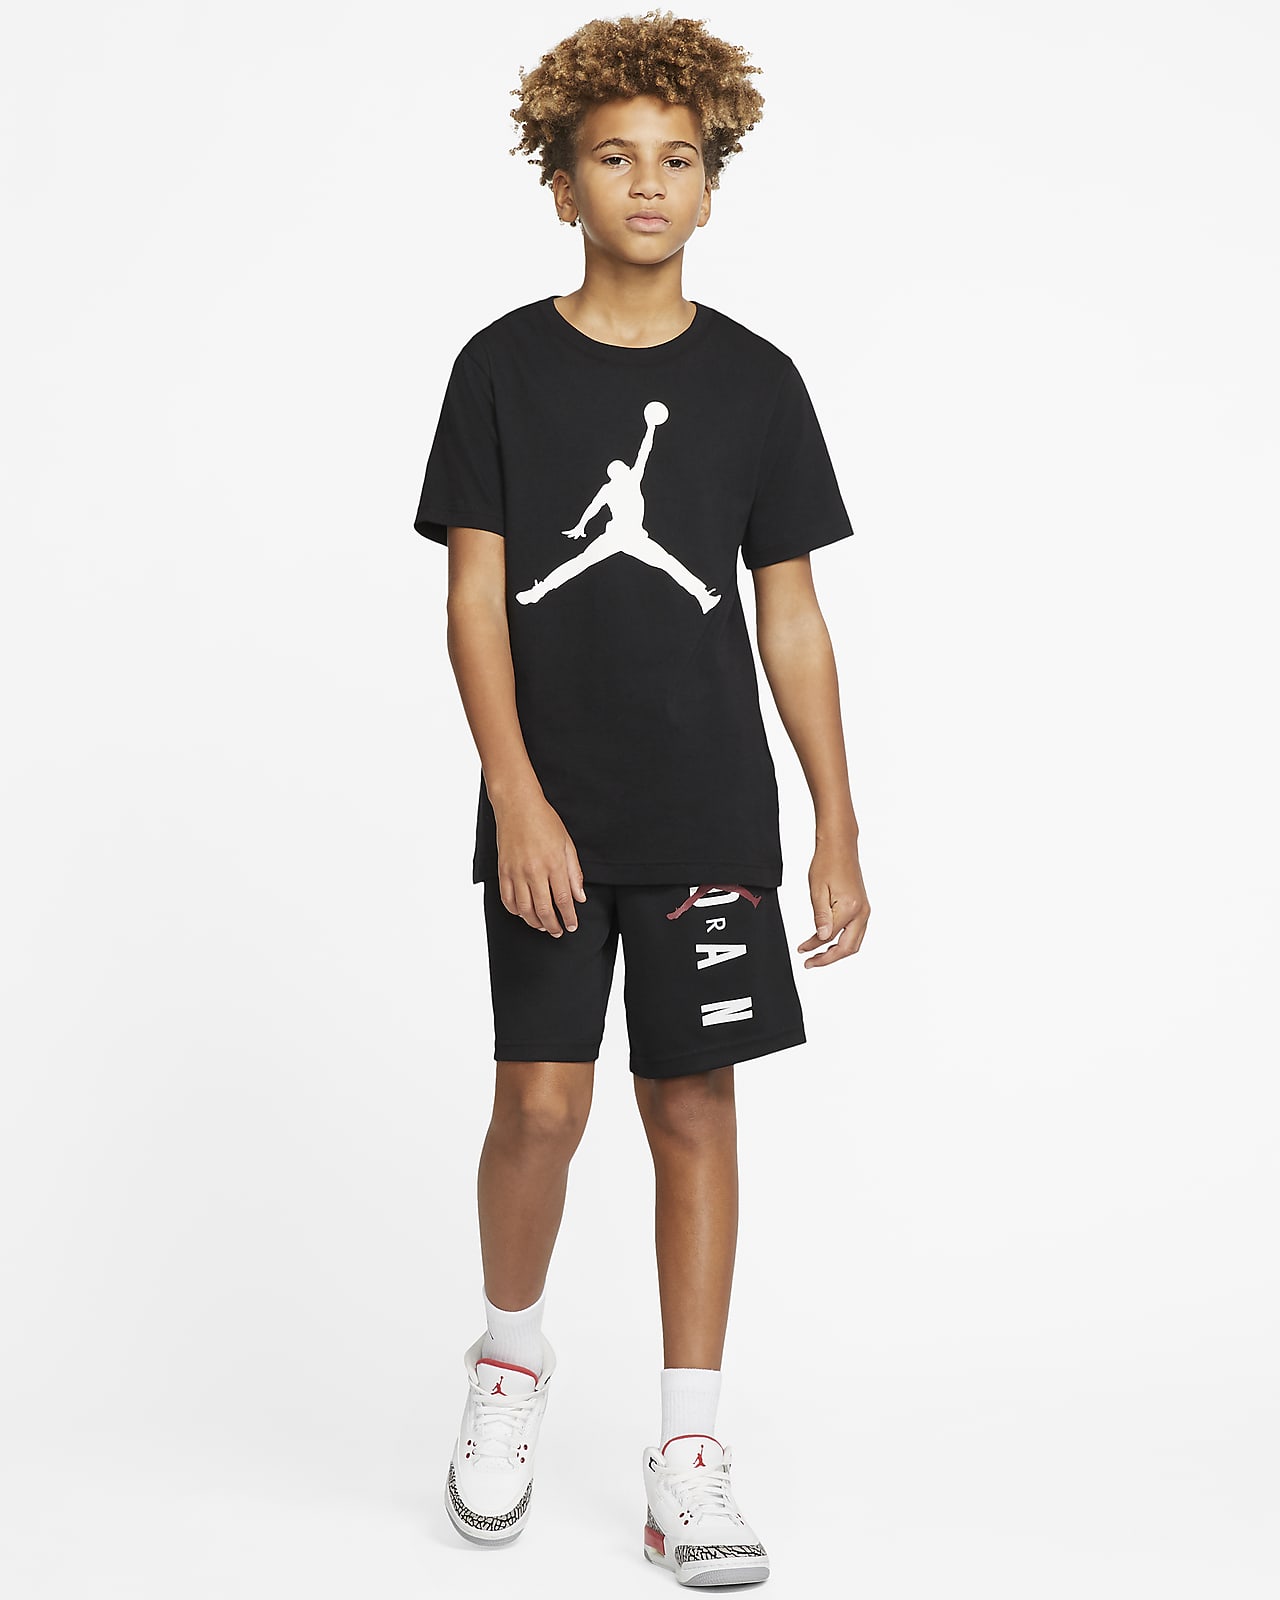 Boys Jordan Basketball Shorts